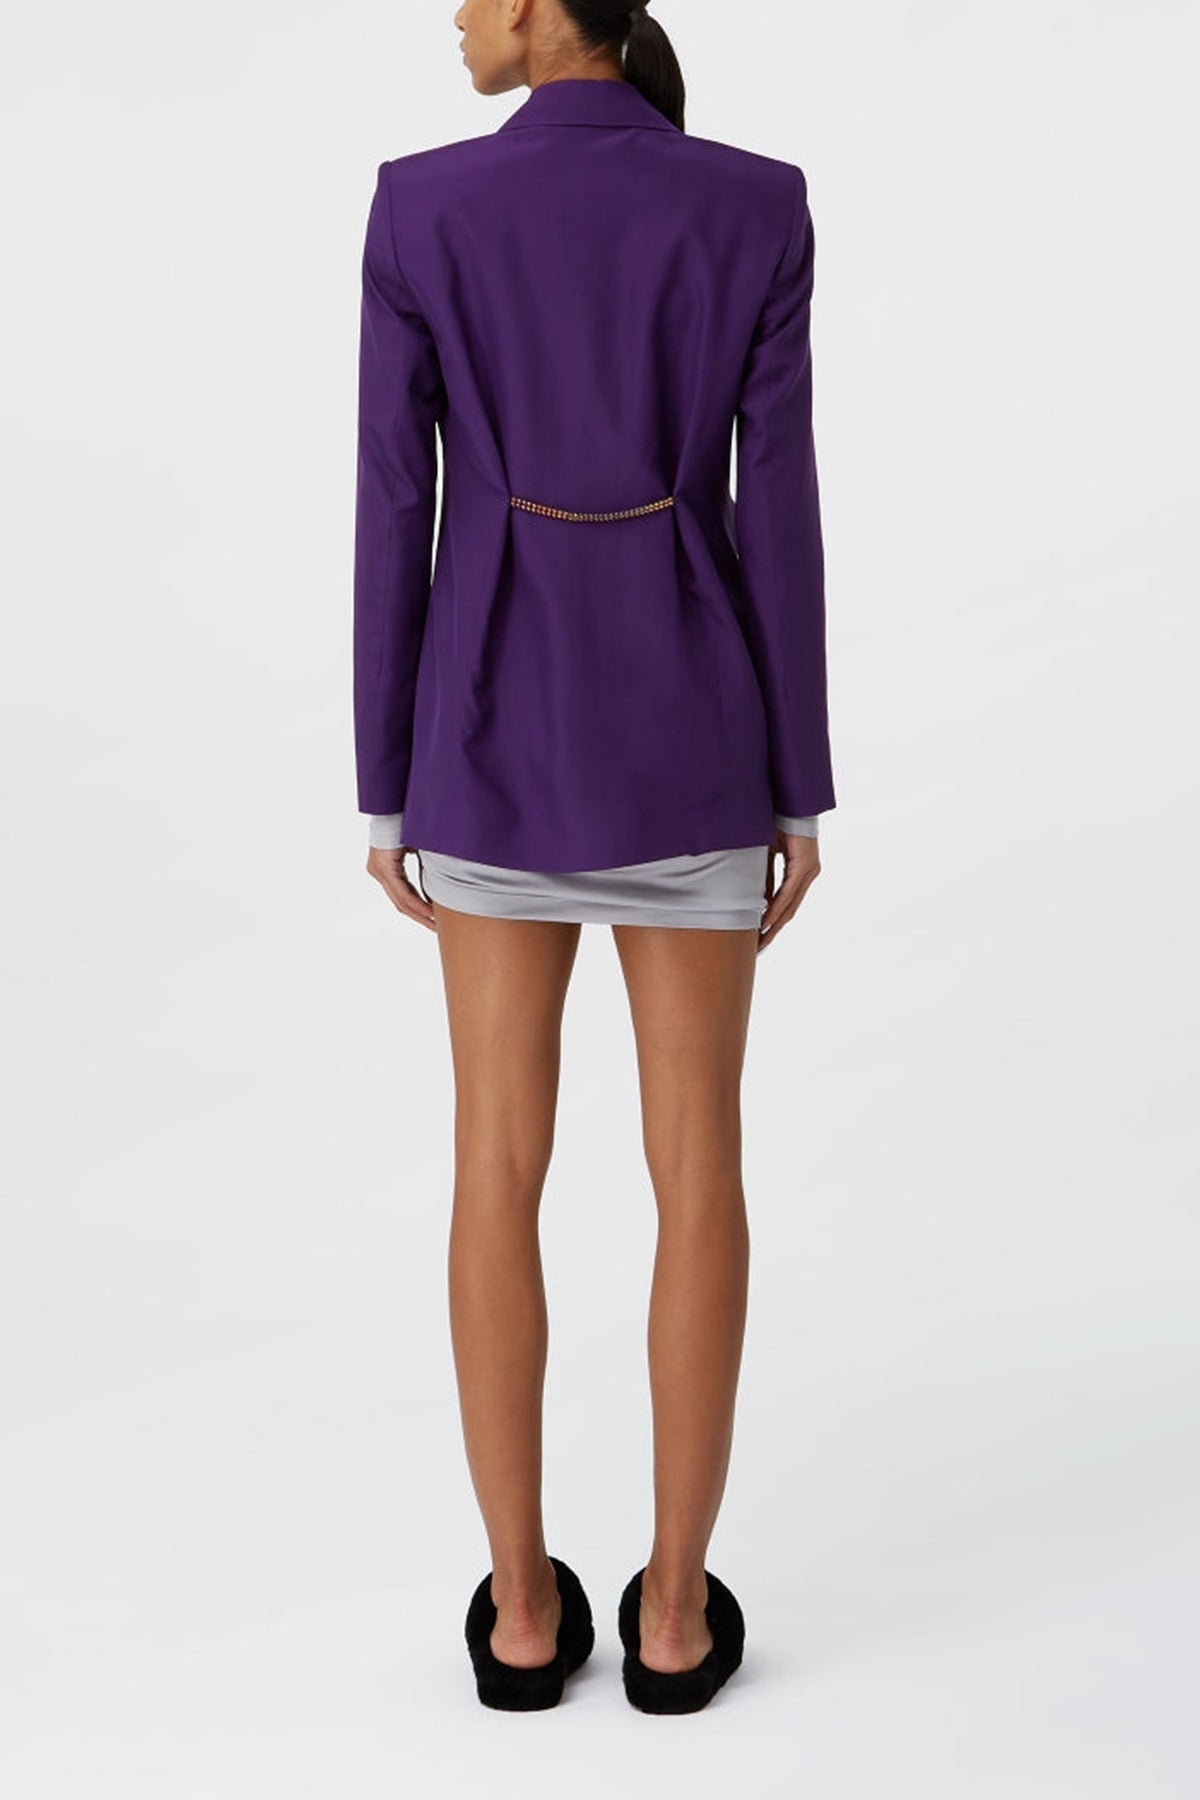 Soka Blazer Shirt in Purple - shop-olivia.com